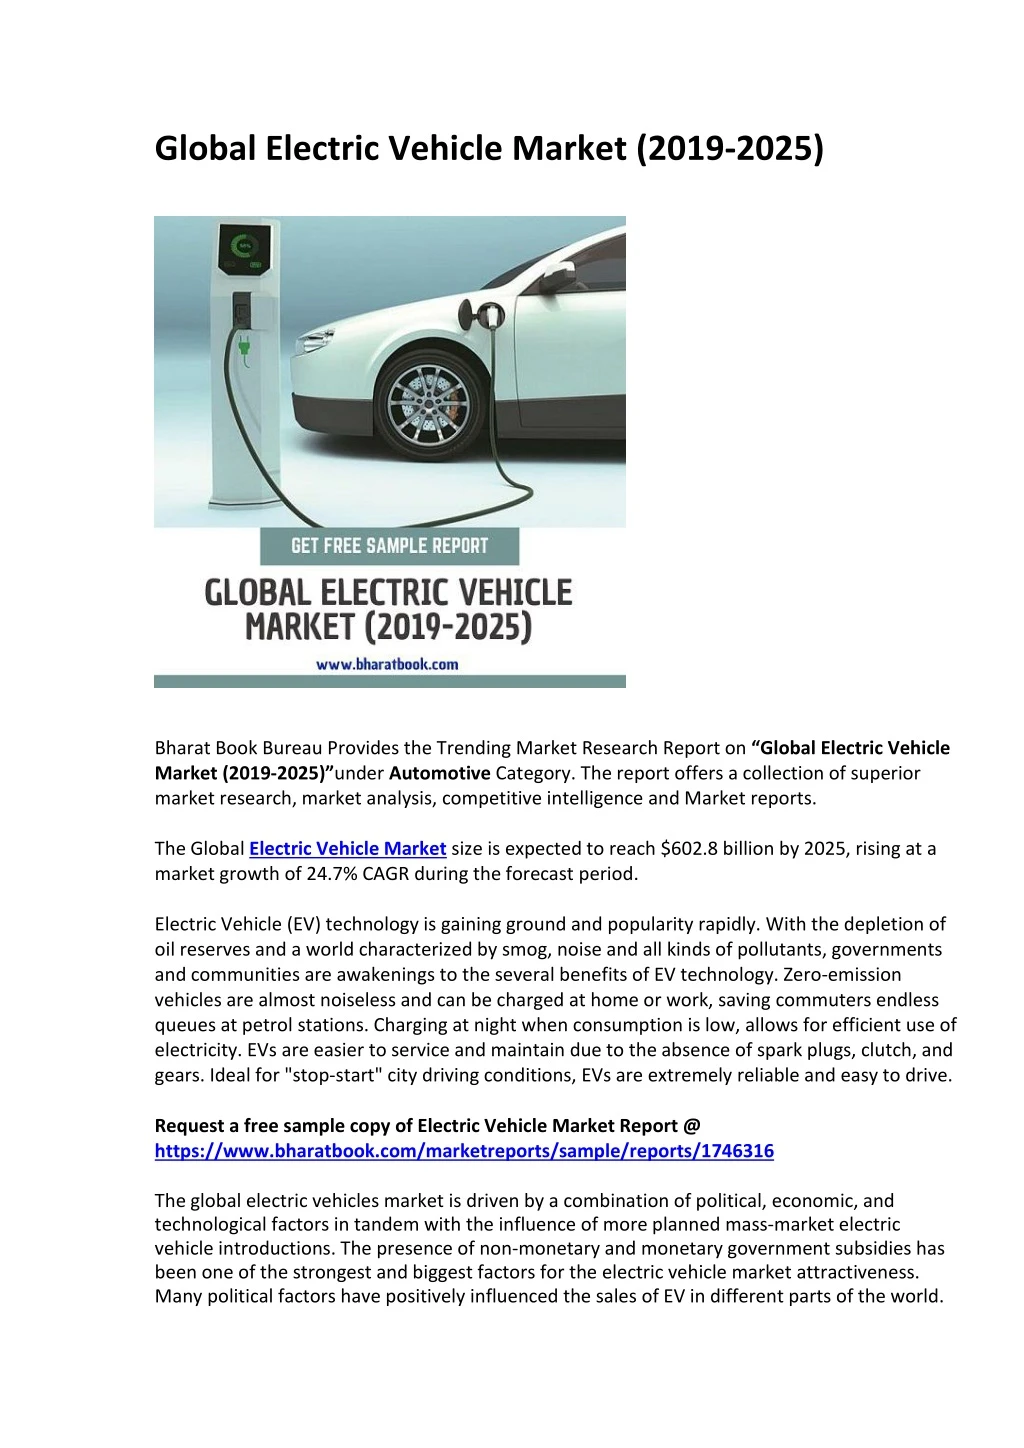 global electric vehicle market 2019 2025